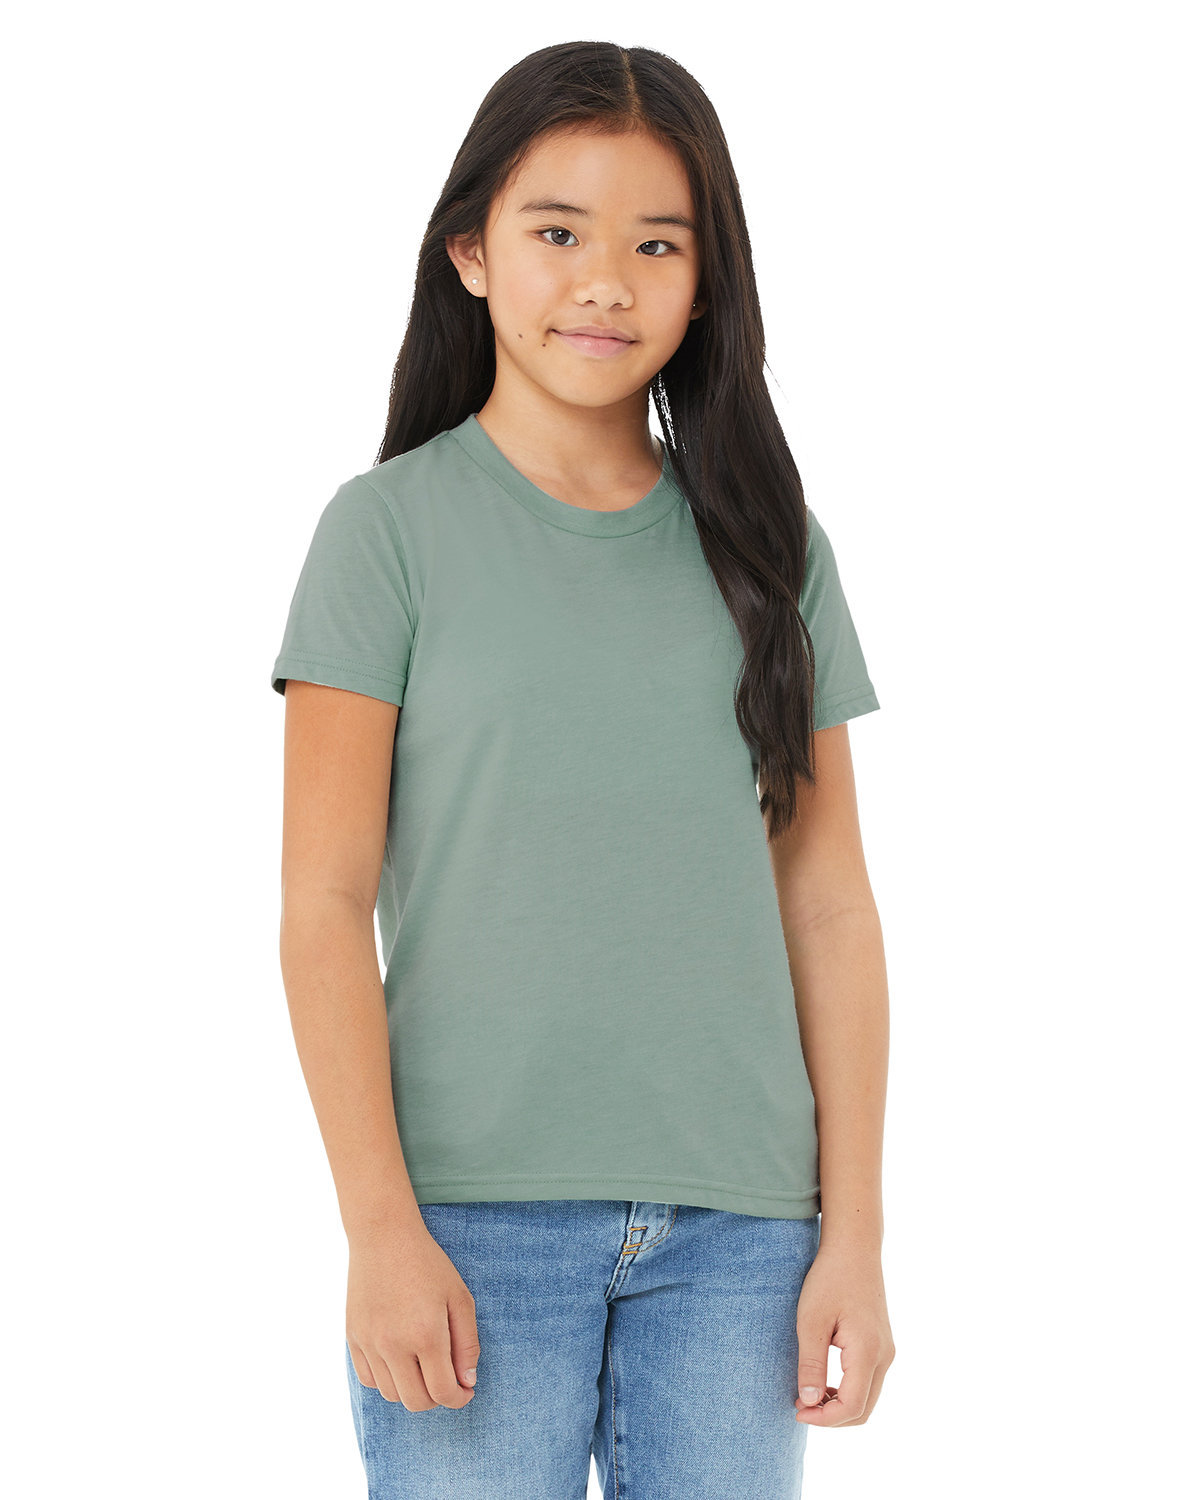 Bella + Canvas Youth CVC Jersey T-Shirt HTHR DUSTY BLUE 